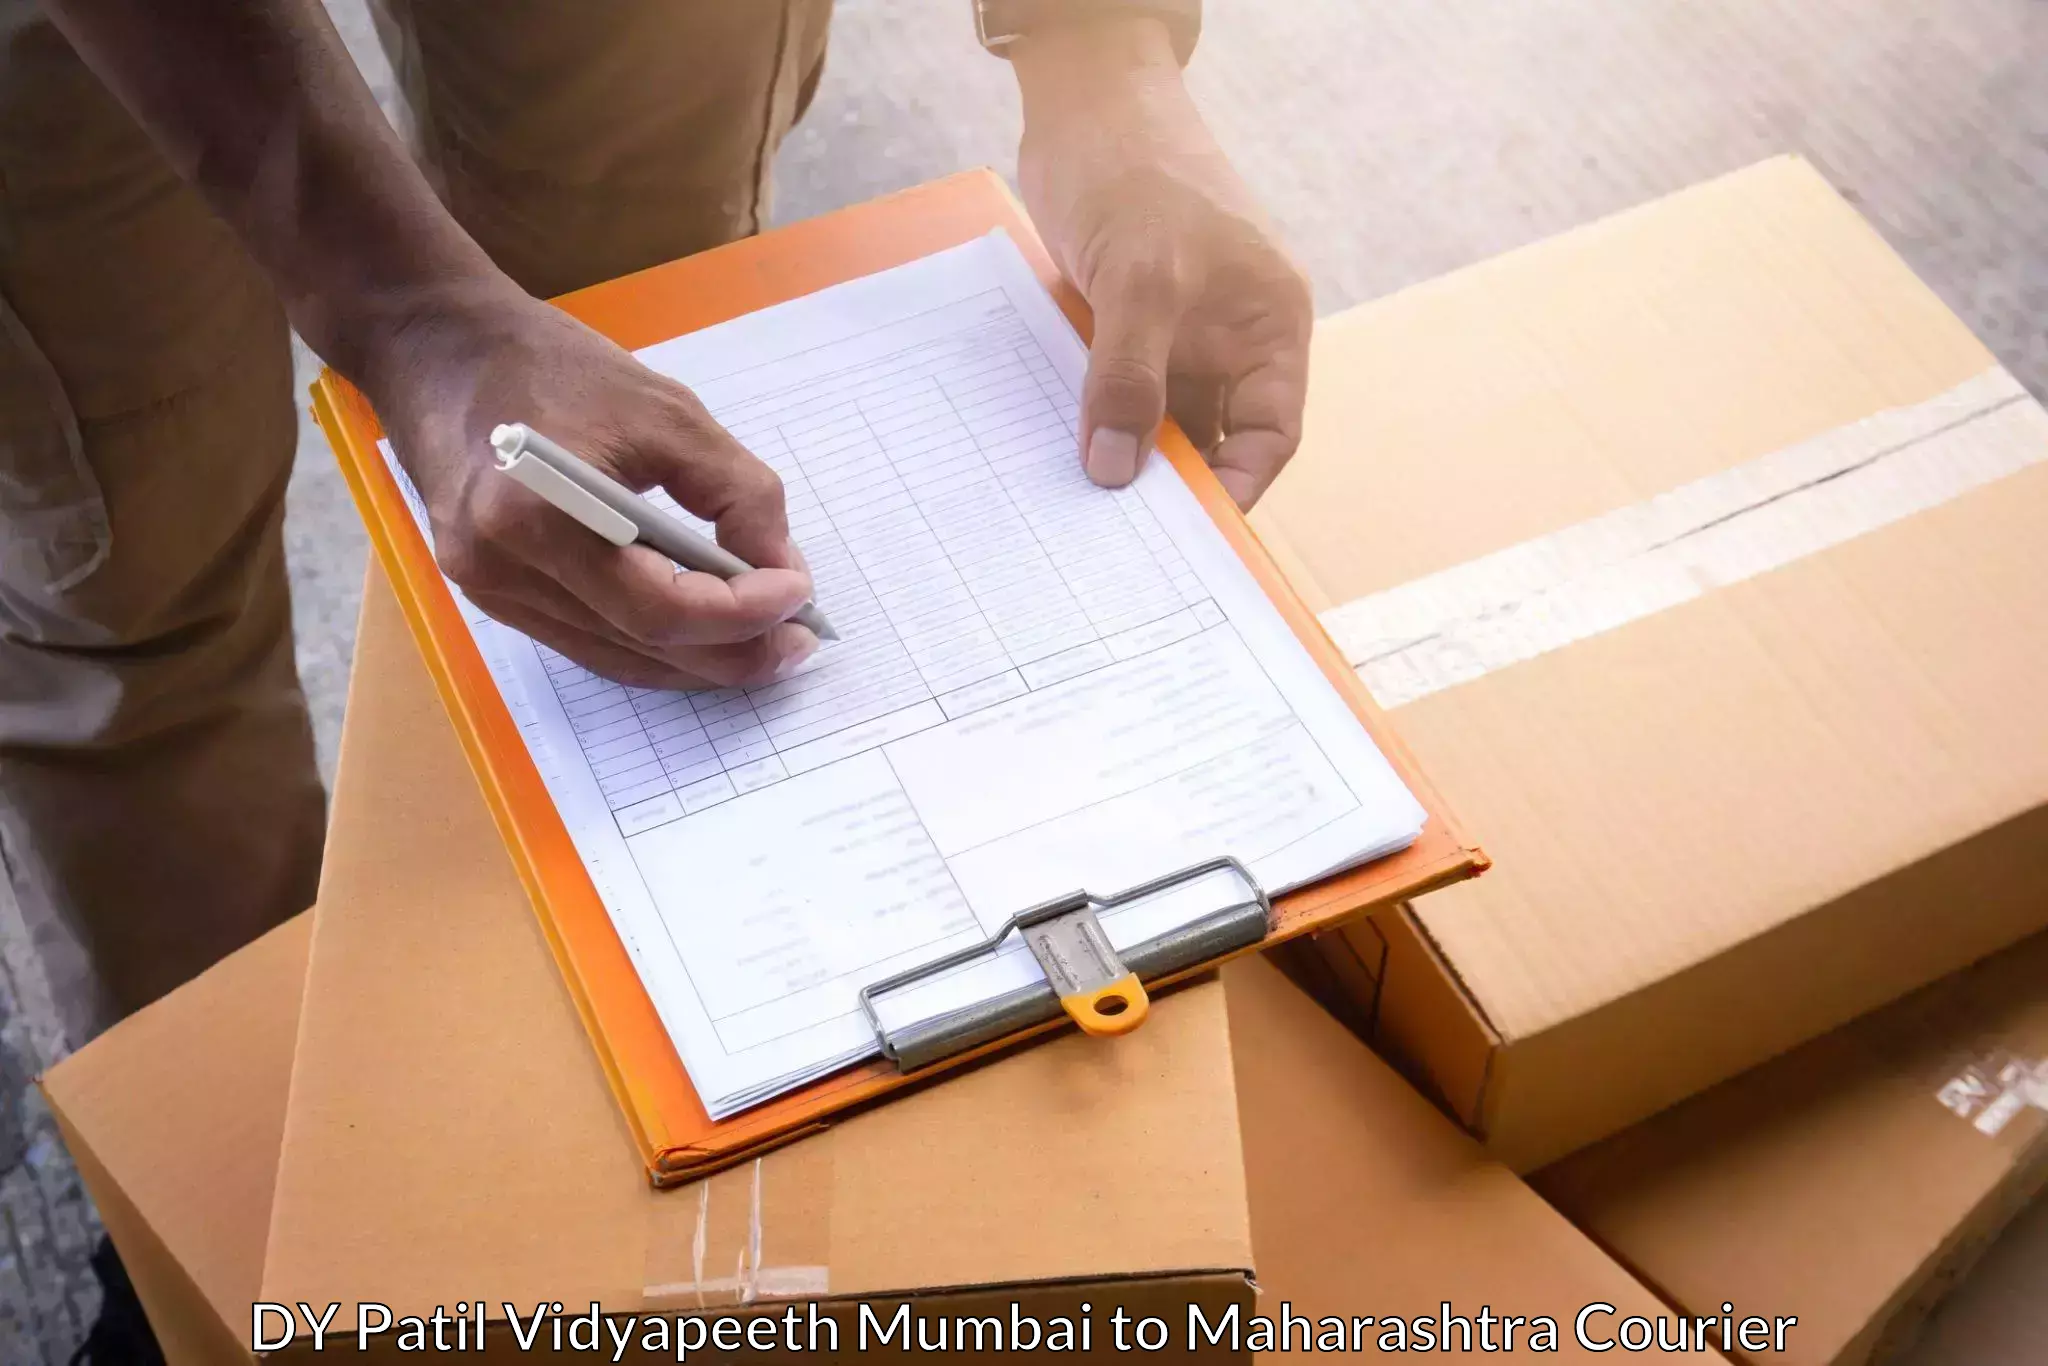 Special handling courier in DY Patil Vidyapeeth Mumbai to Ichalkaranji